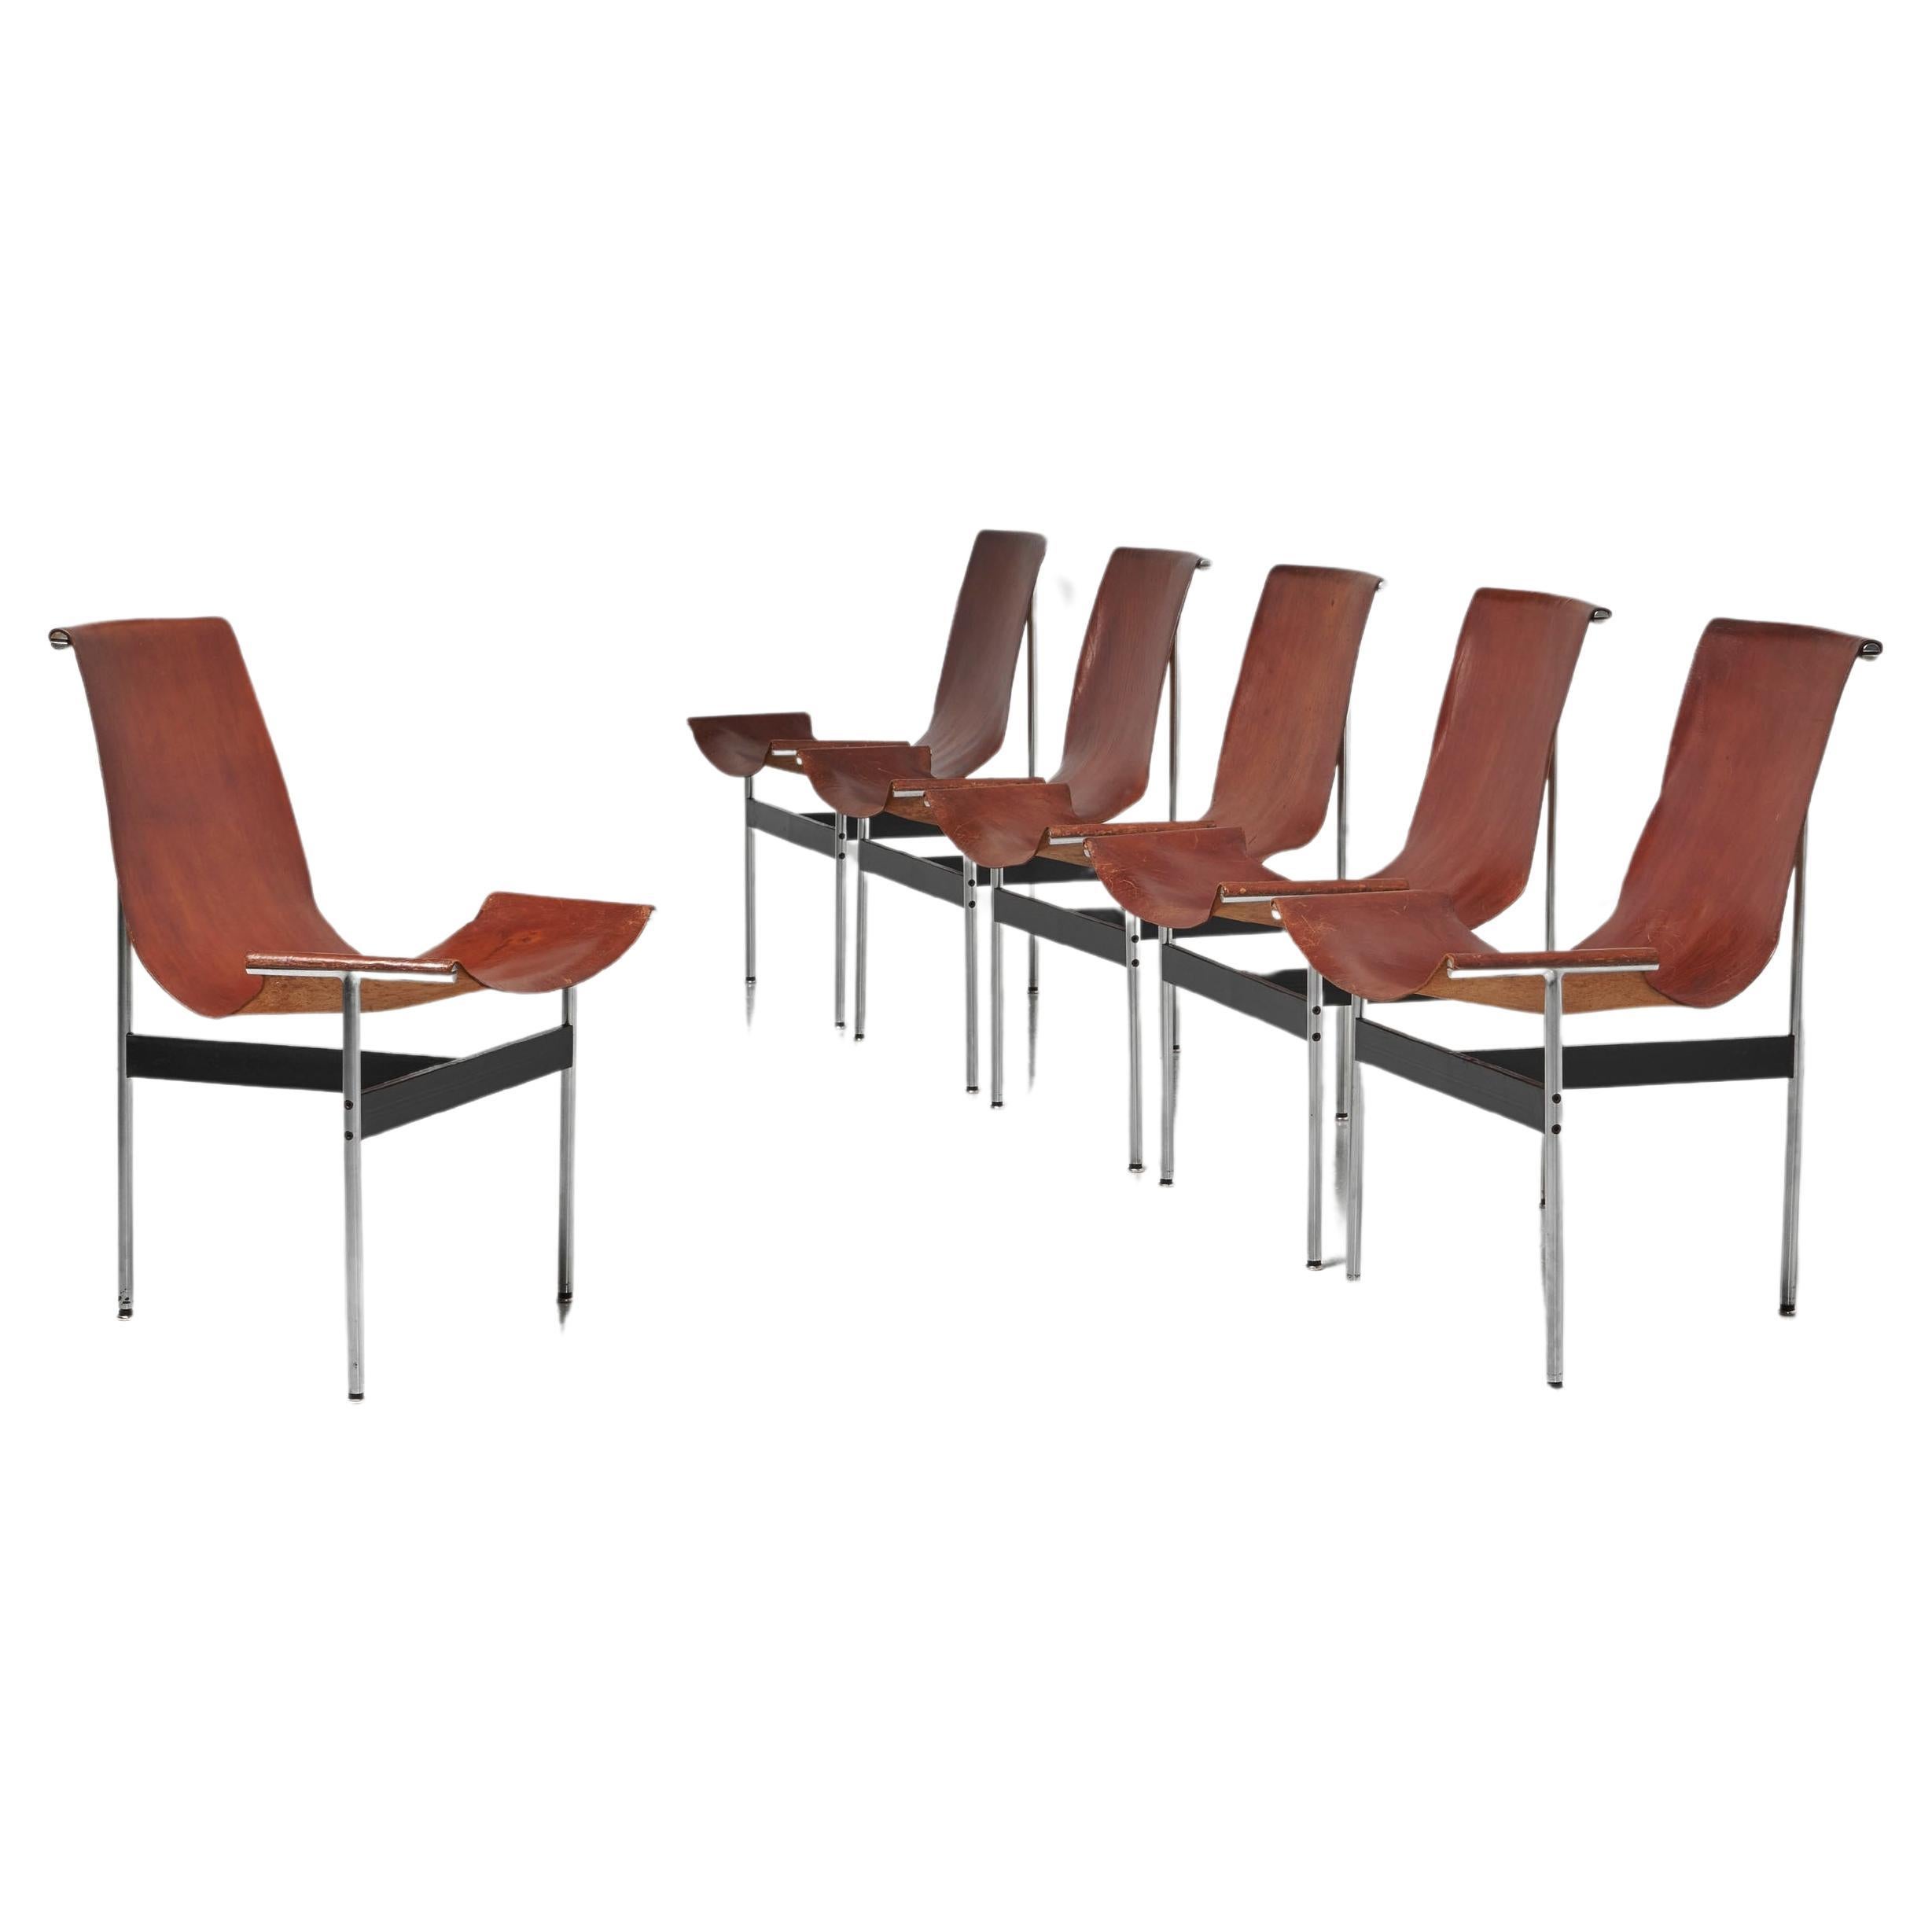 Katavolos, Kelley and Littell T-Chairs set of 6 ICF de Padova Italy 1952